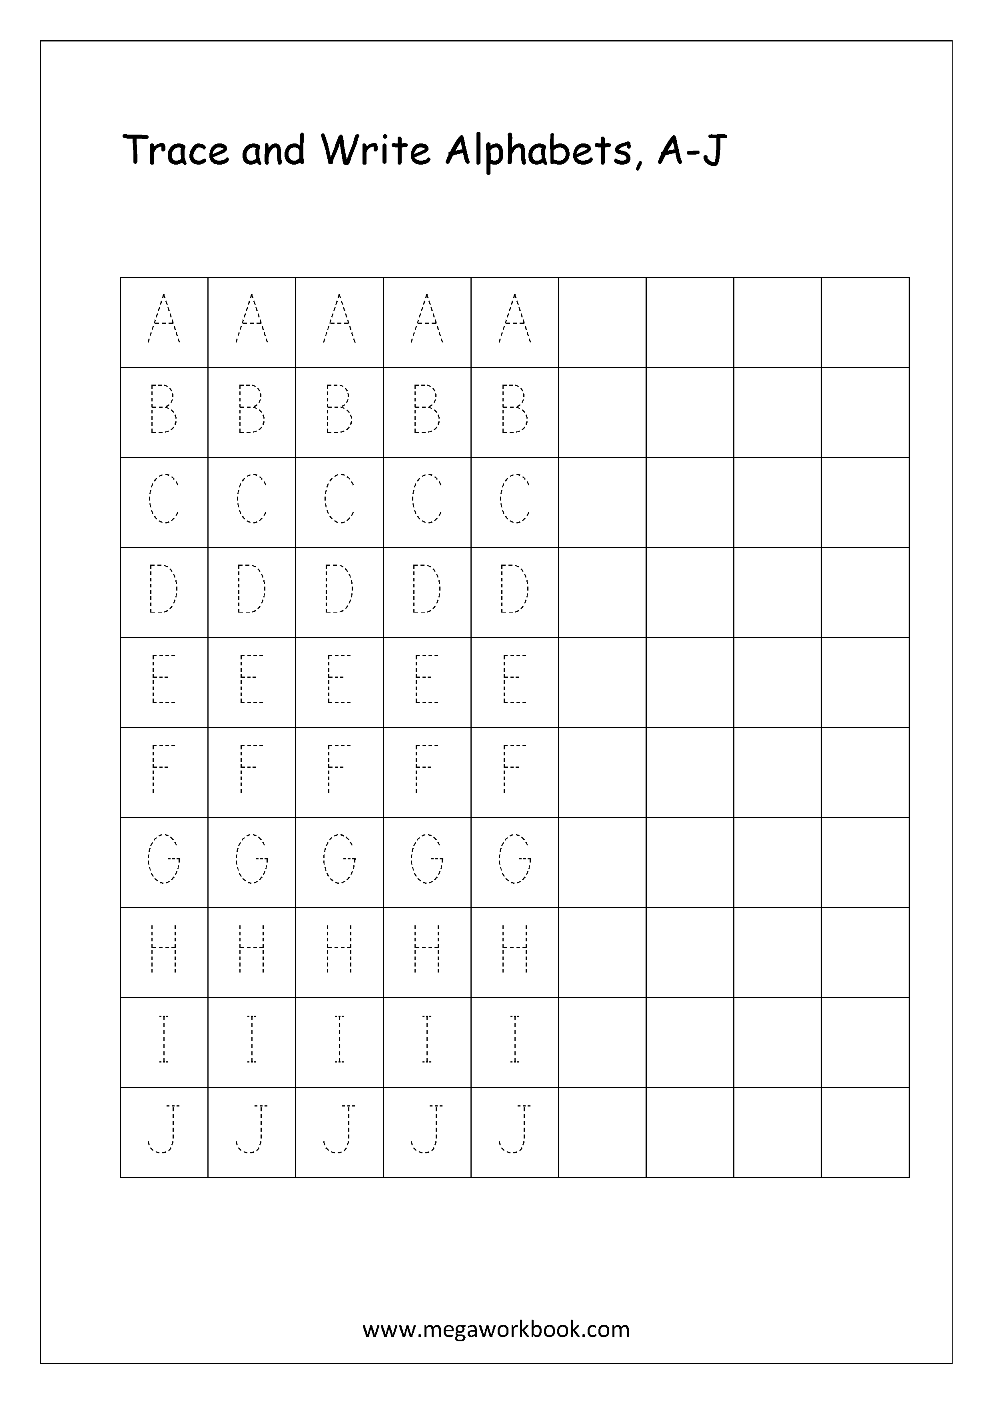 gujarati-alphabet-tracing-worksheets-alphabetworksheetsfree